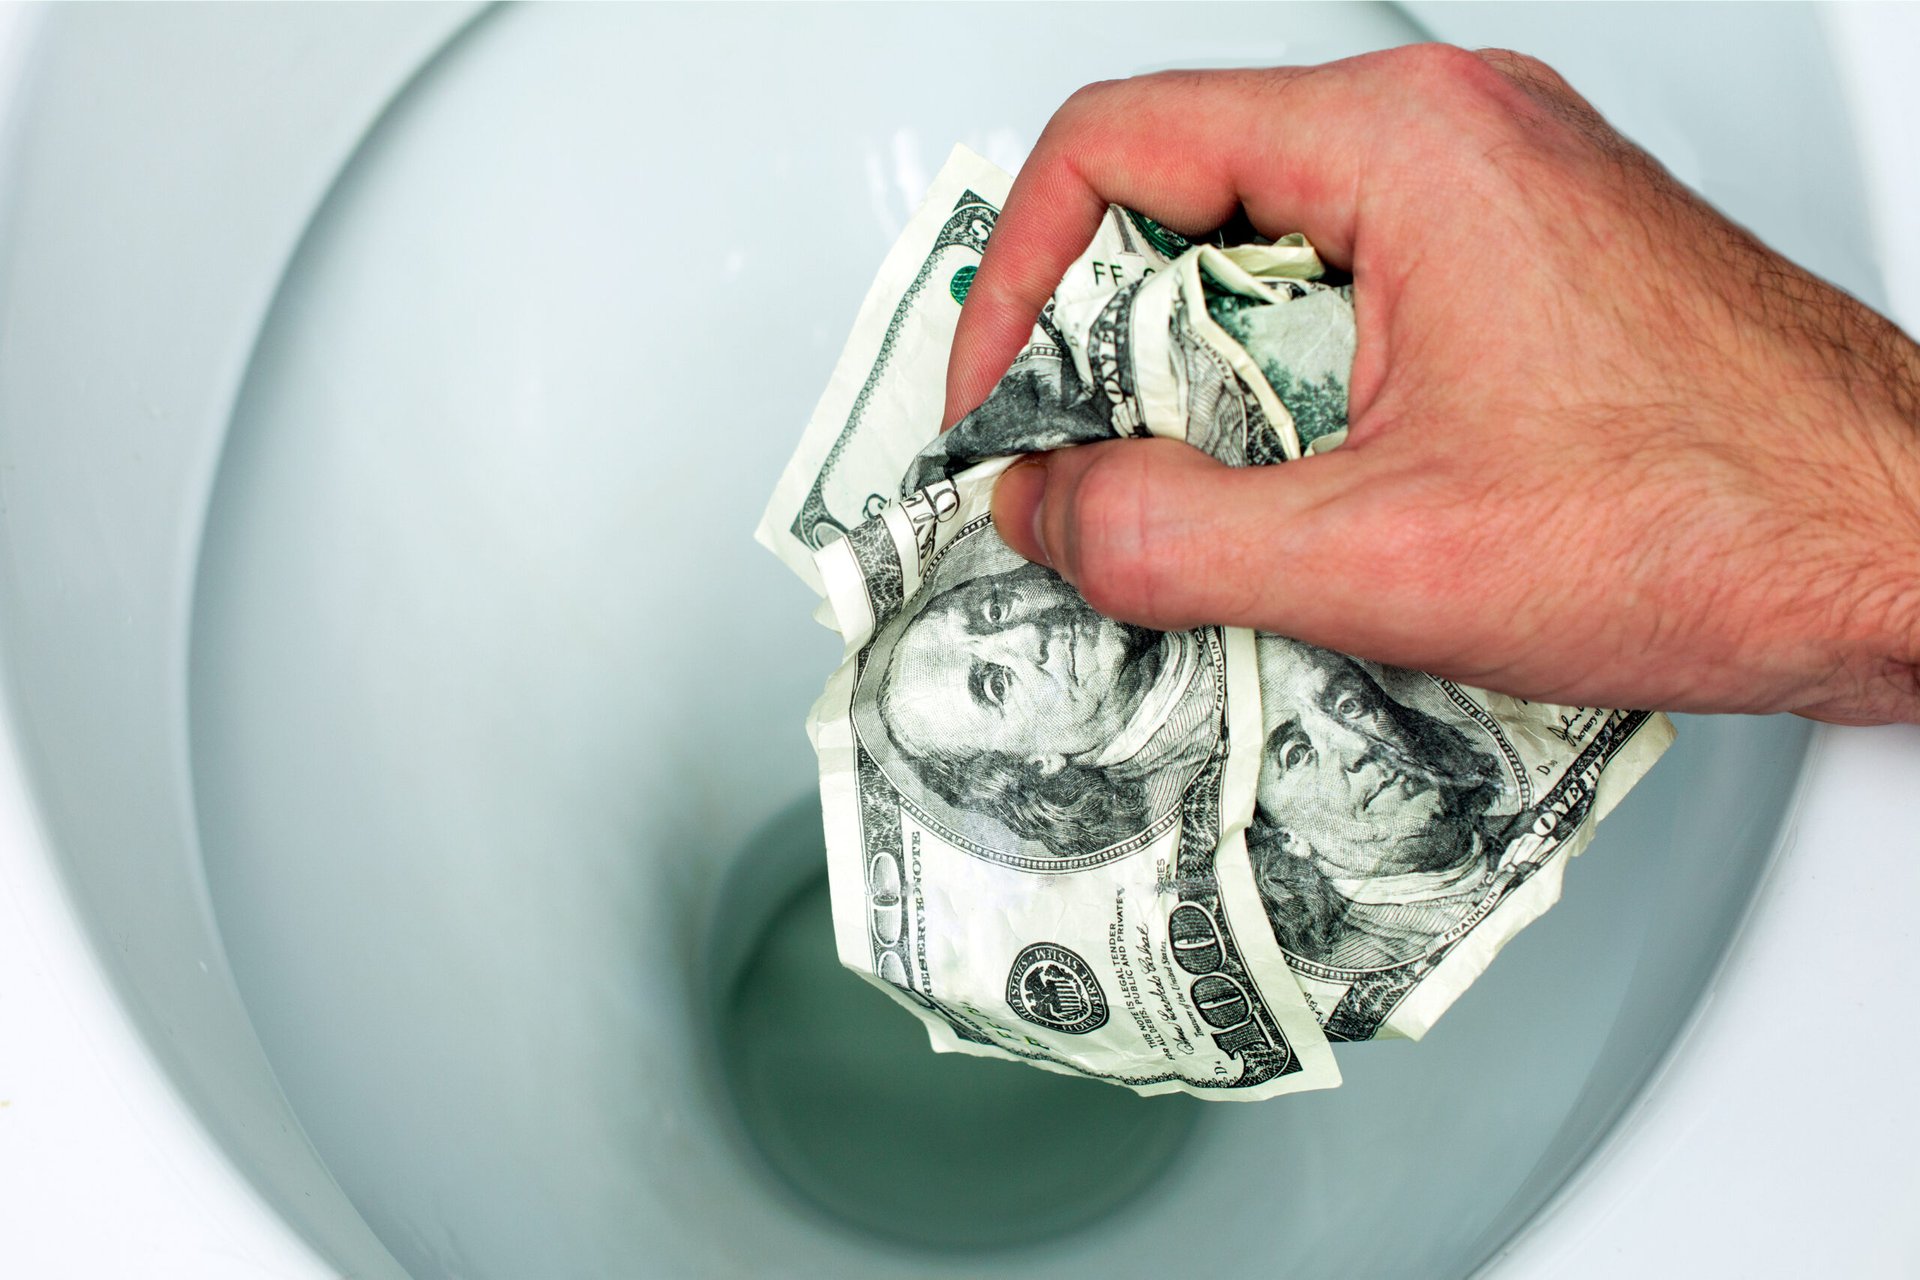 Flushing cash money down the toilet